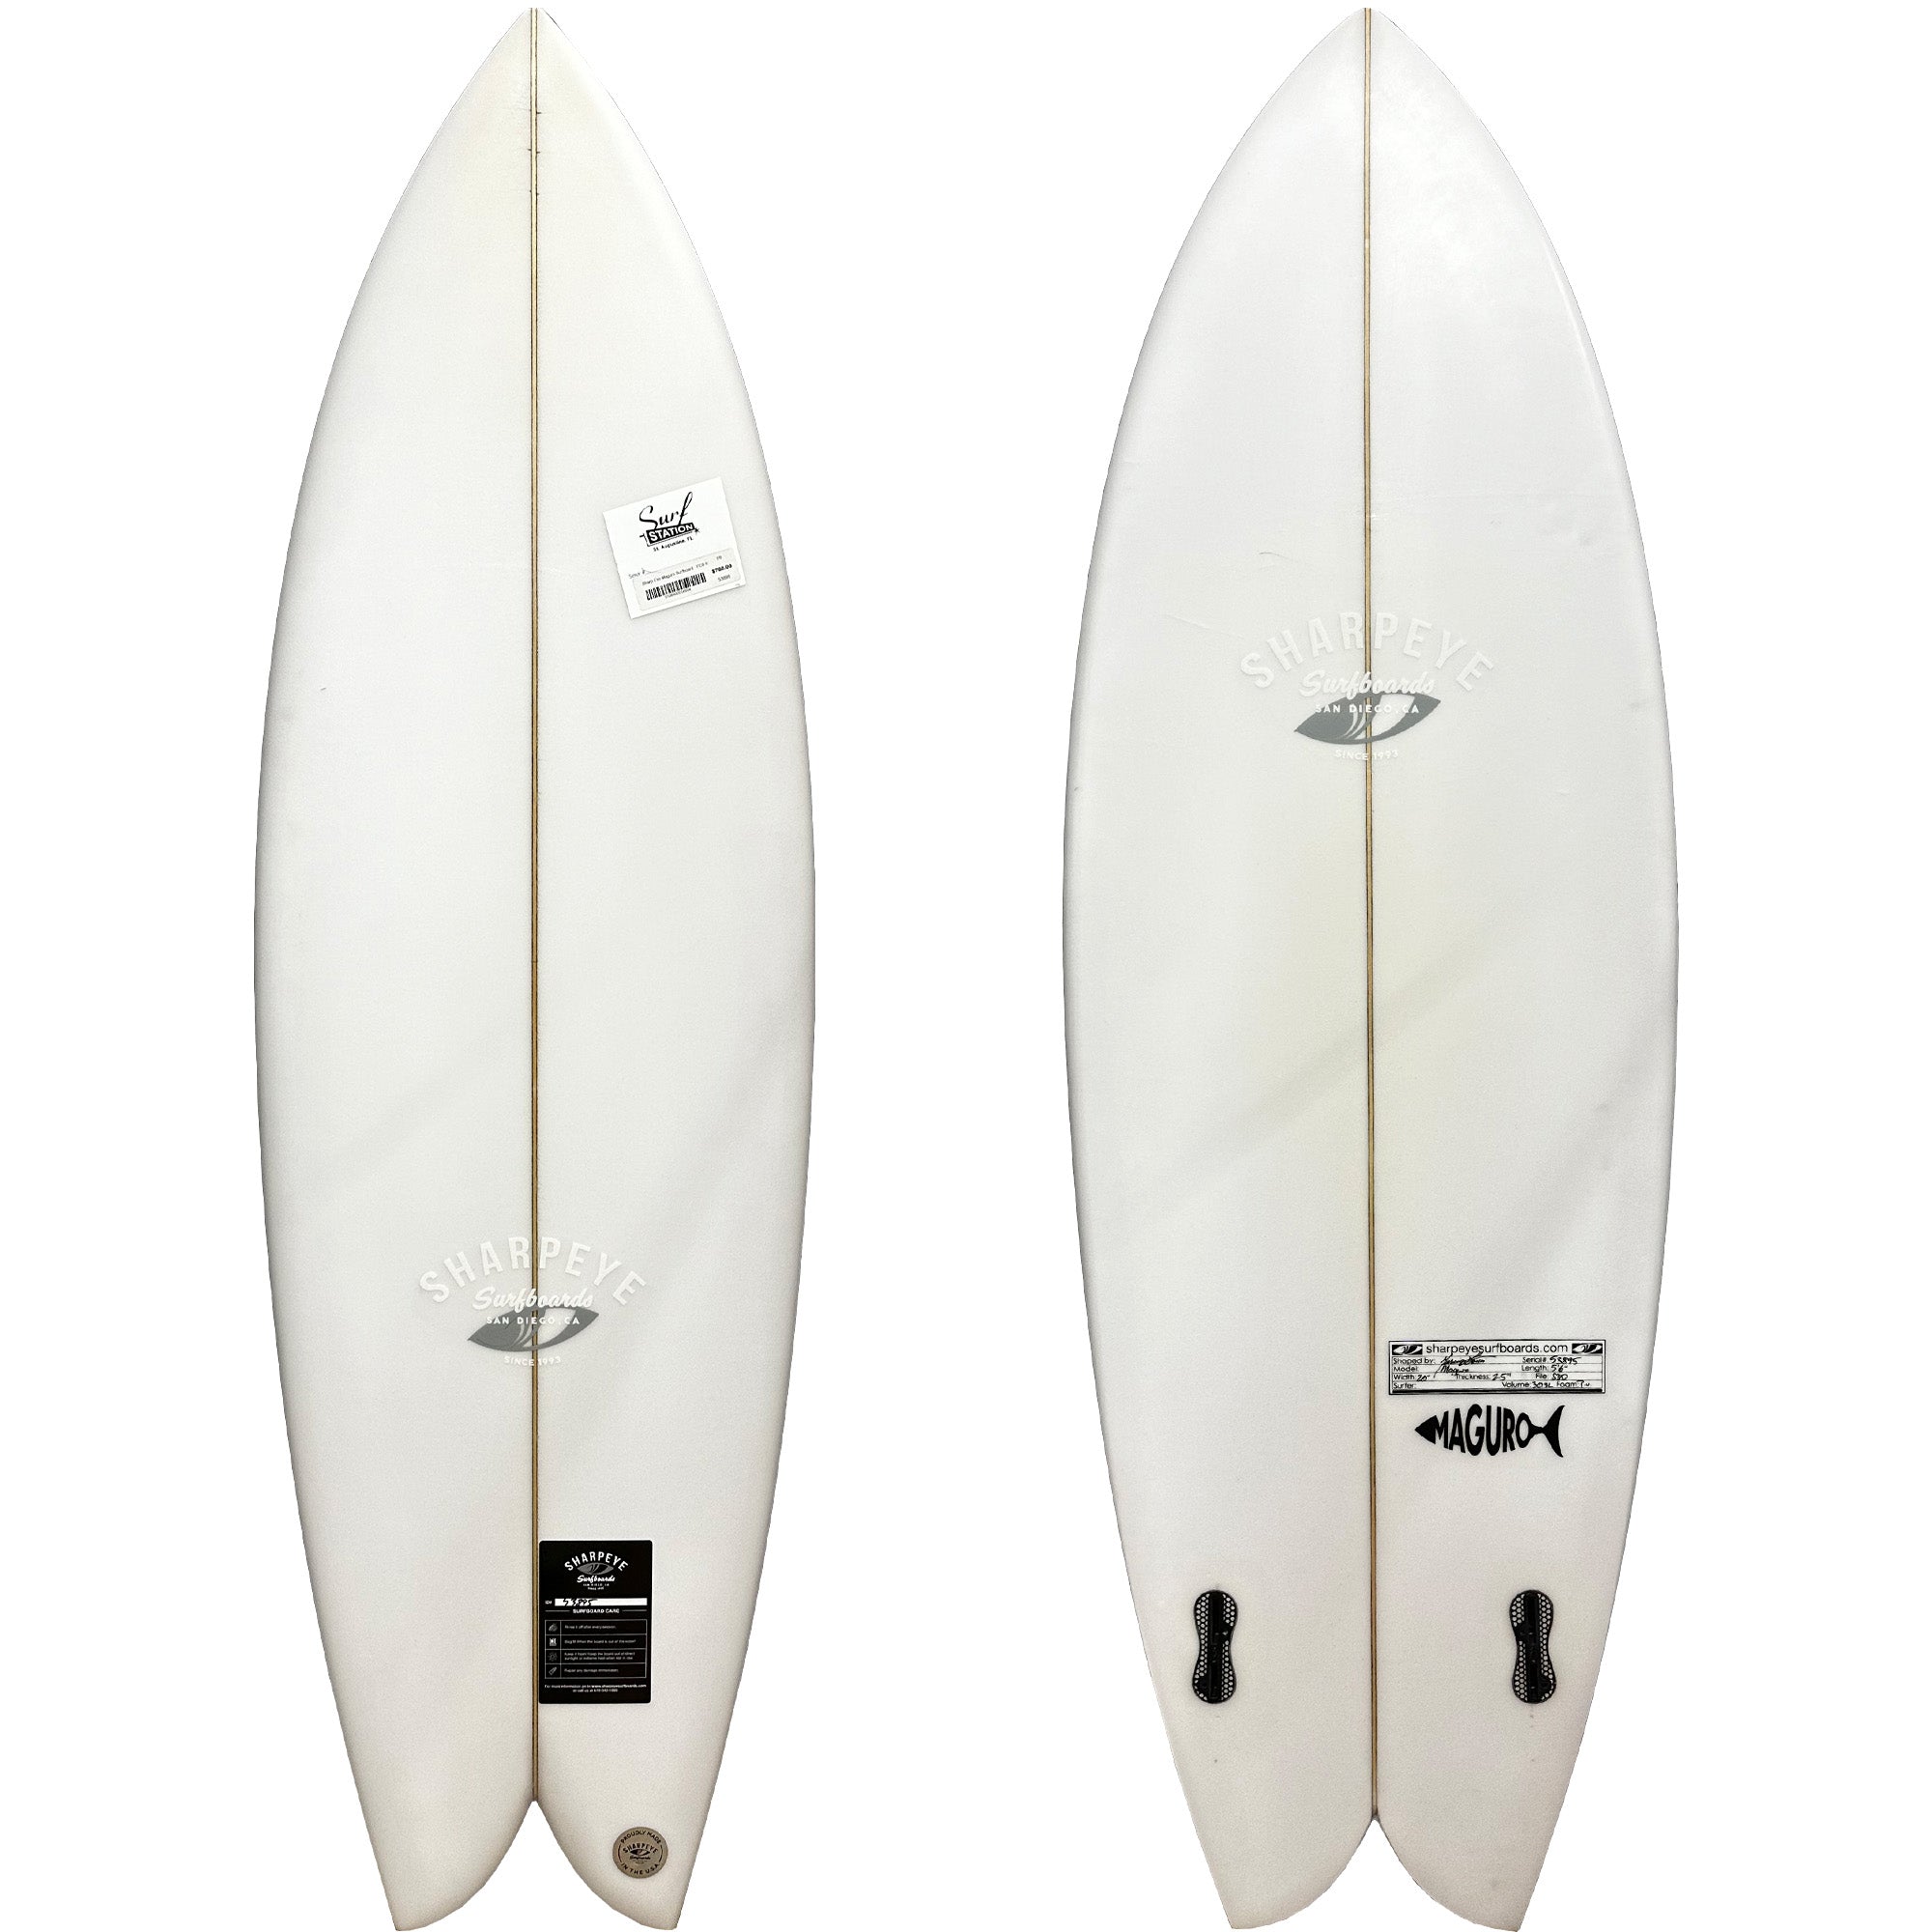 Sharp Eye Maguro Surfboard - FCS II